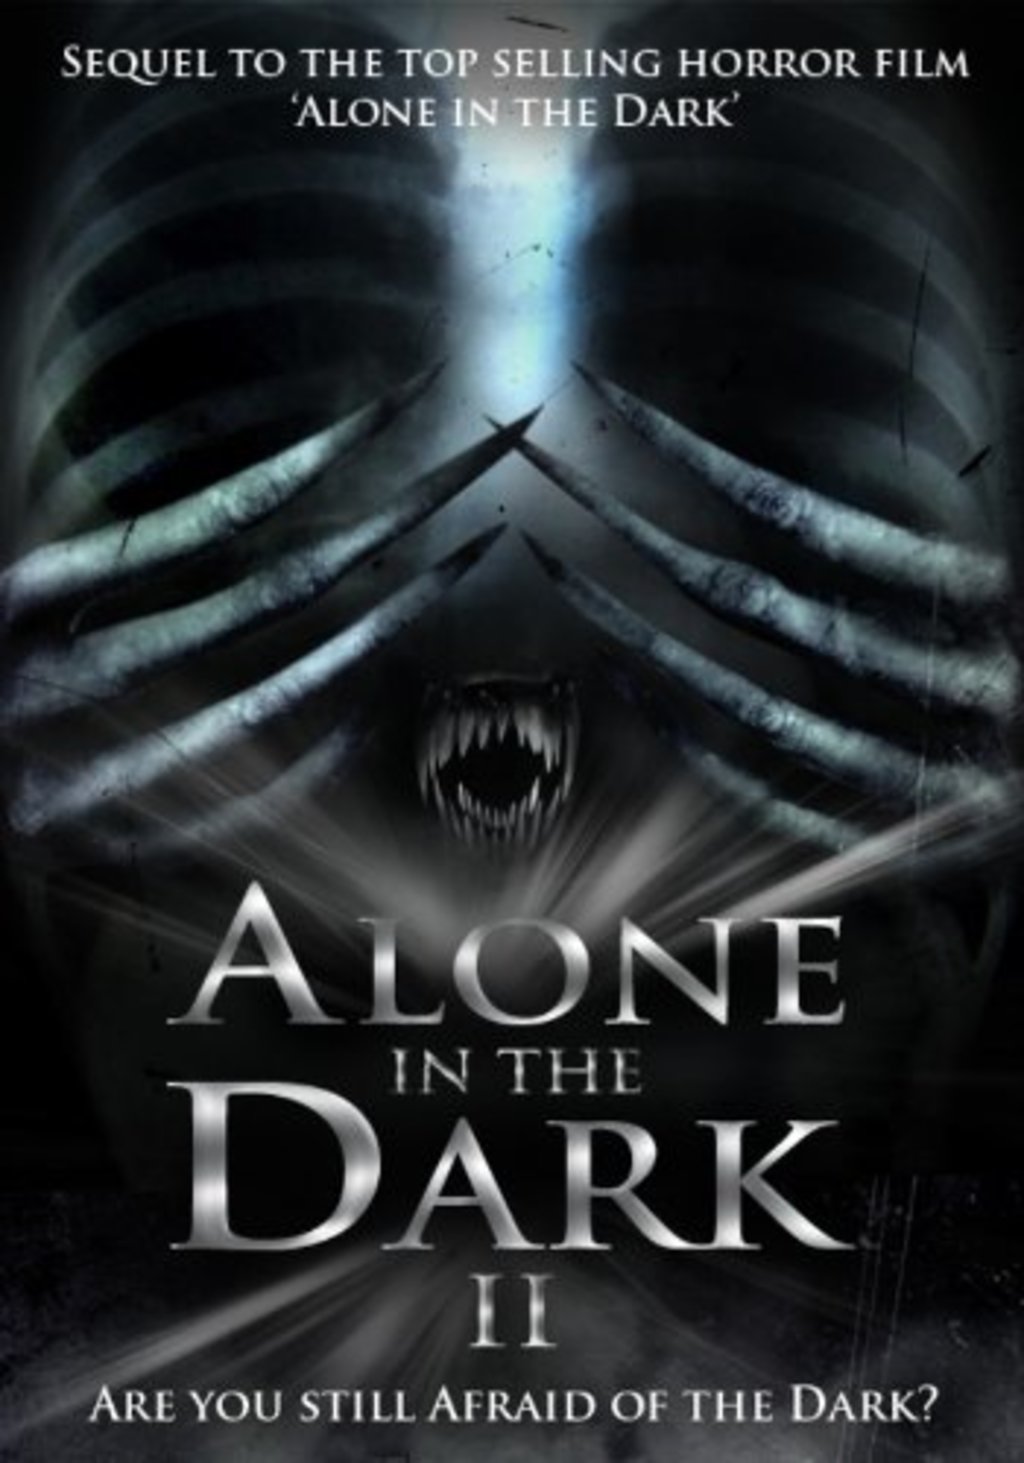 Watch Alone in the Dark II on Netflix Today!